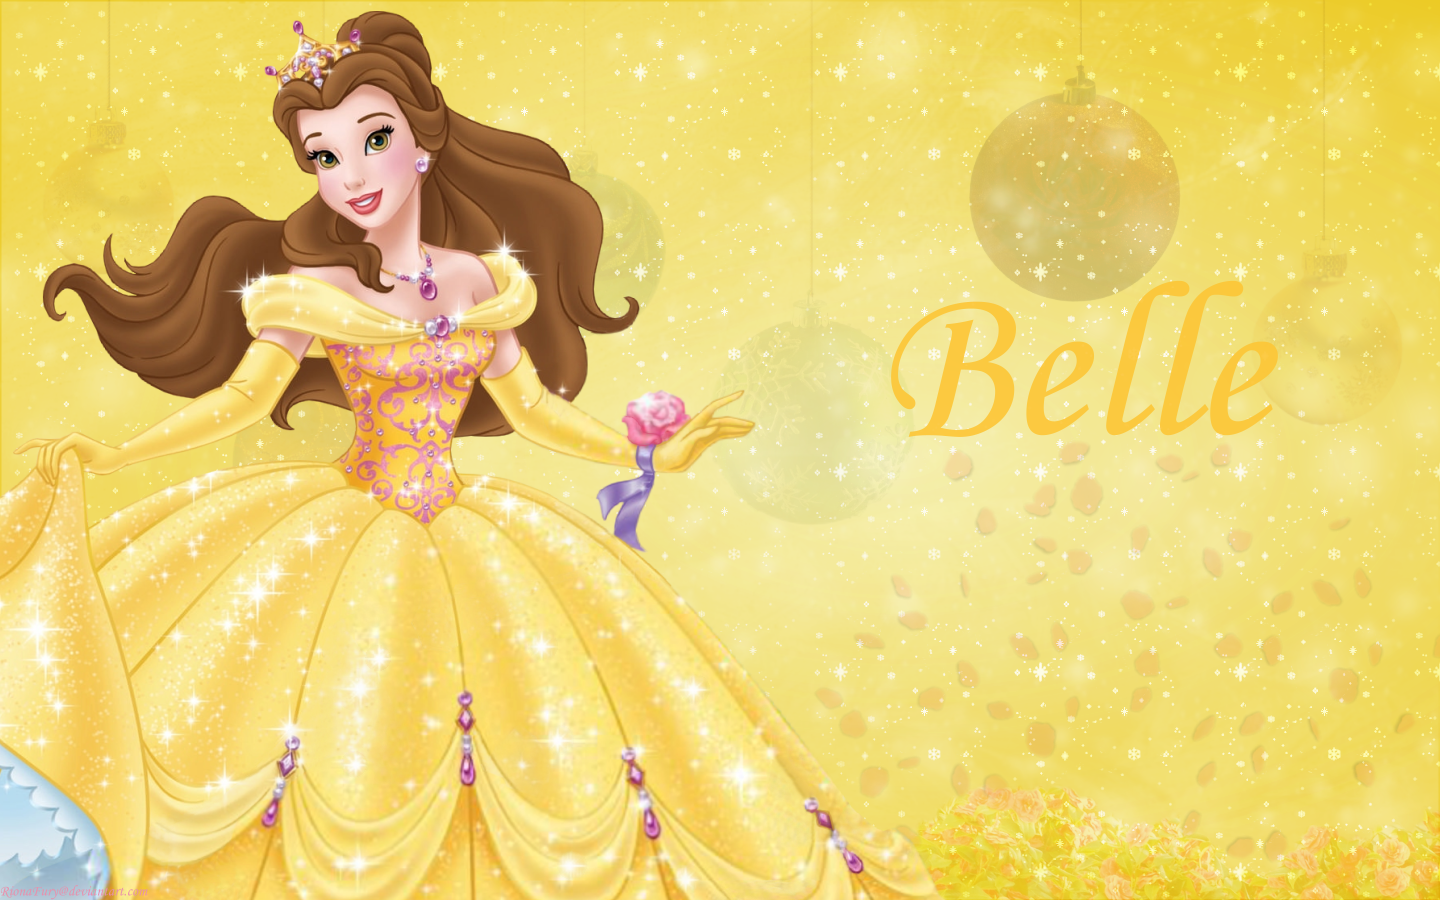 Make your dreams come true with Disney Princess